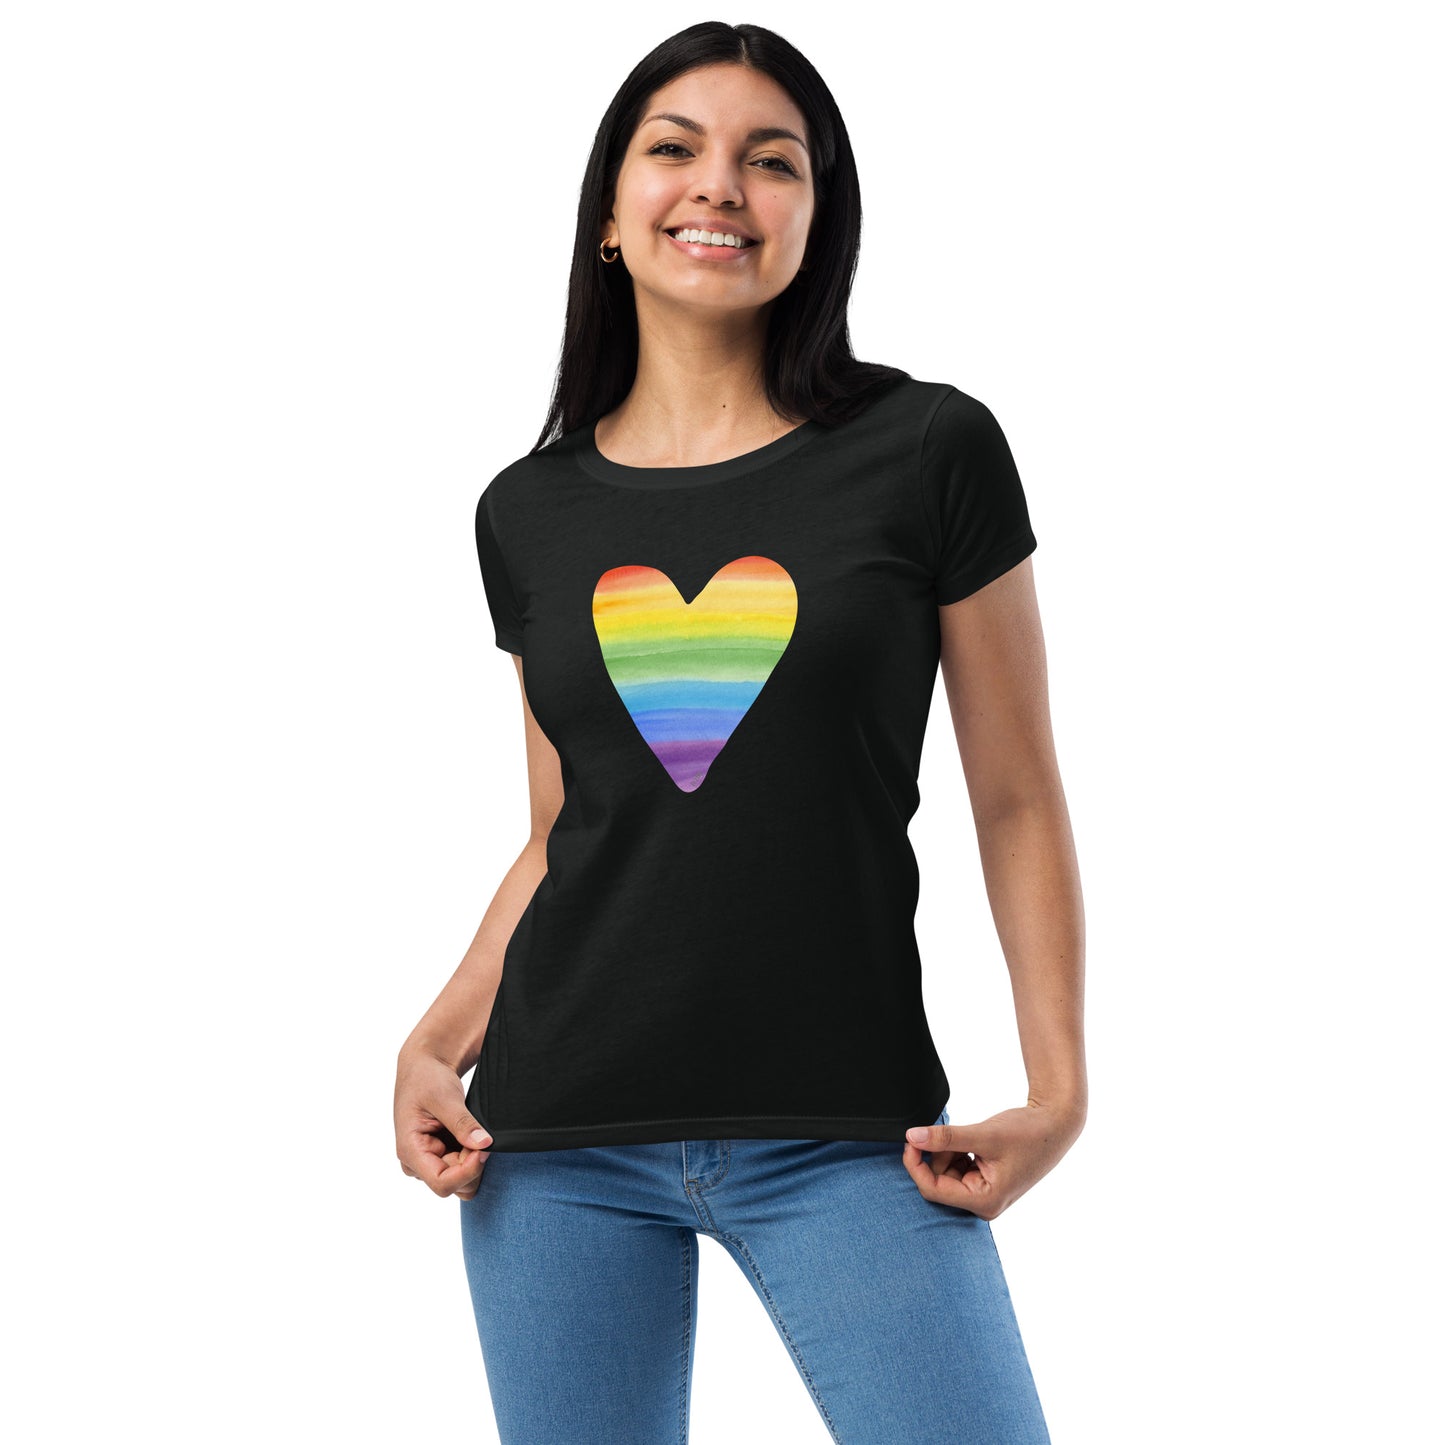 Women’s Fitted T-Shirt Super Soft & Stretchy Slim Fit Next Level Rainbow Heart Design by IOBI Original Apparel